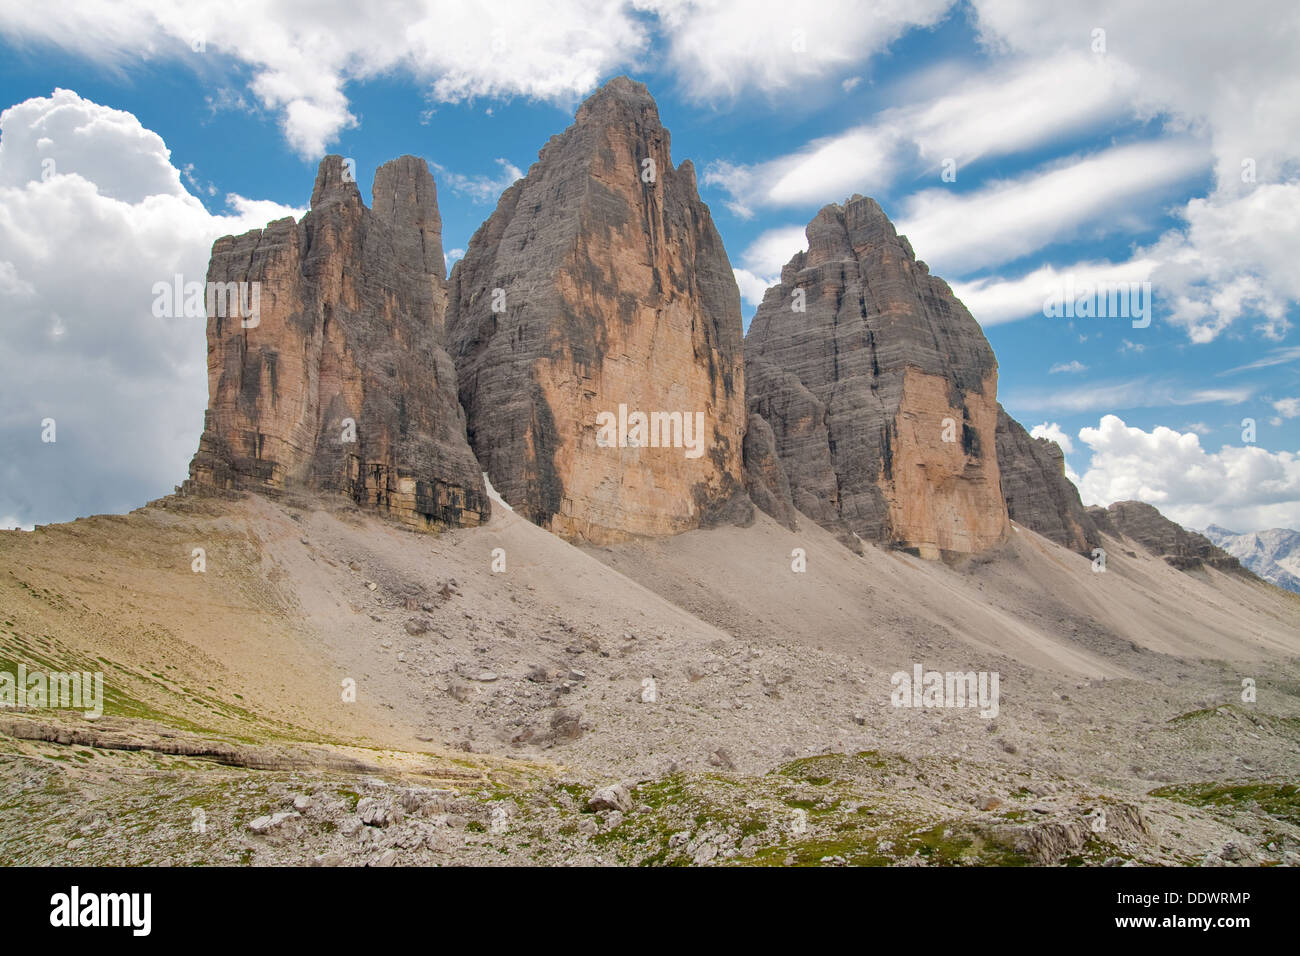 Drei Zinnen, Dolomites Alps, Italy. Stock Photo